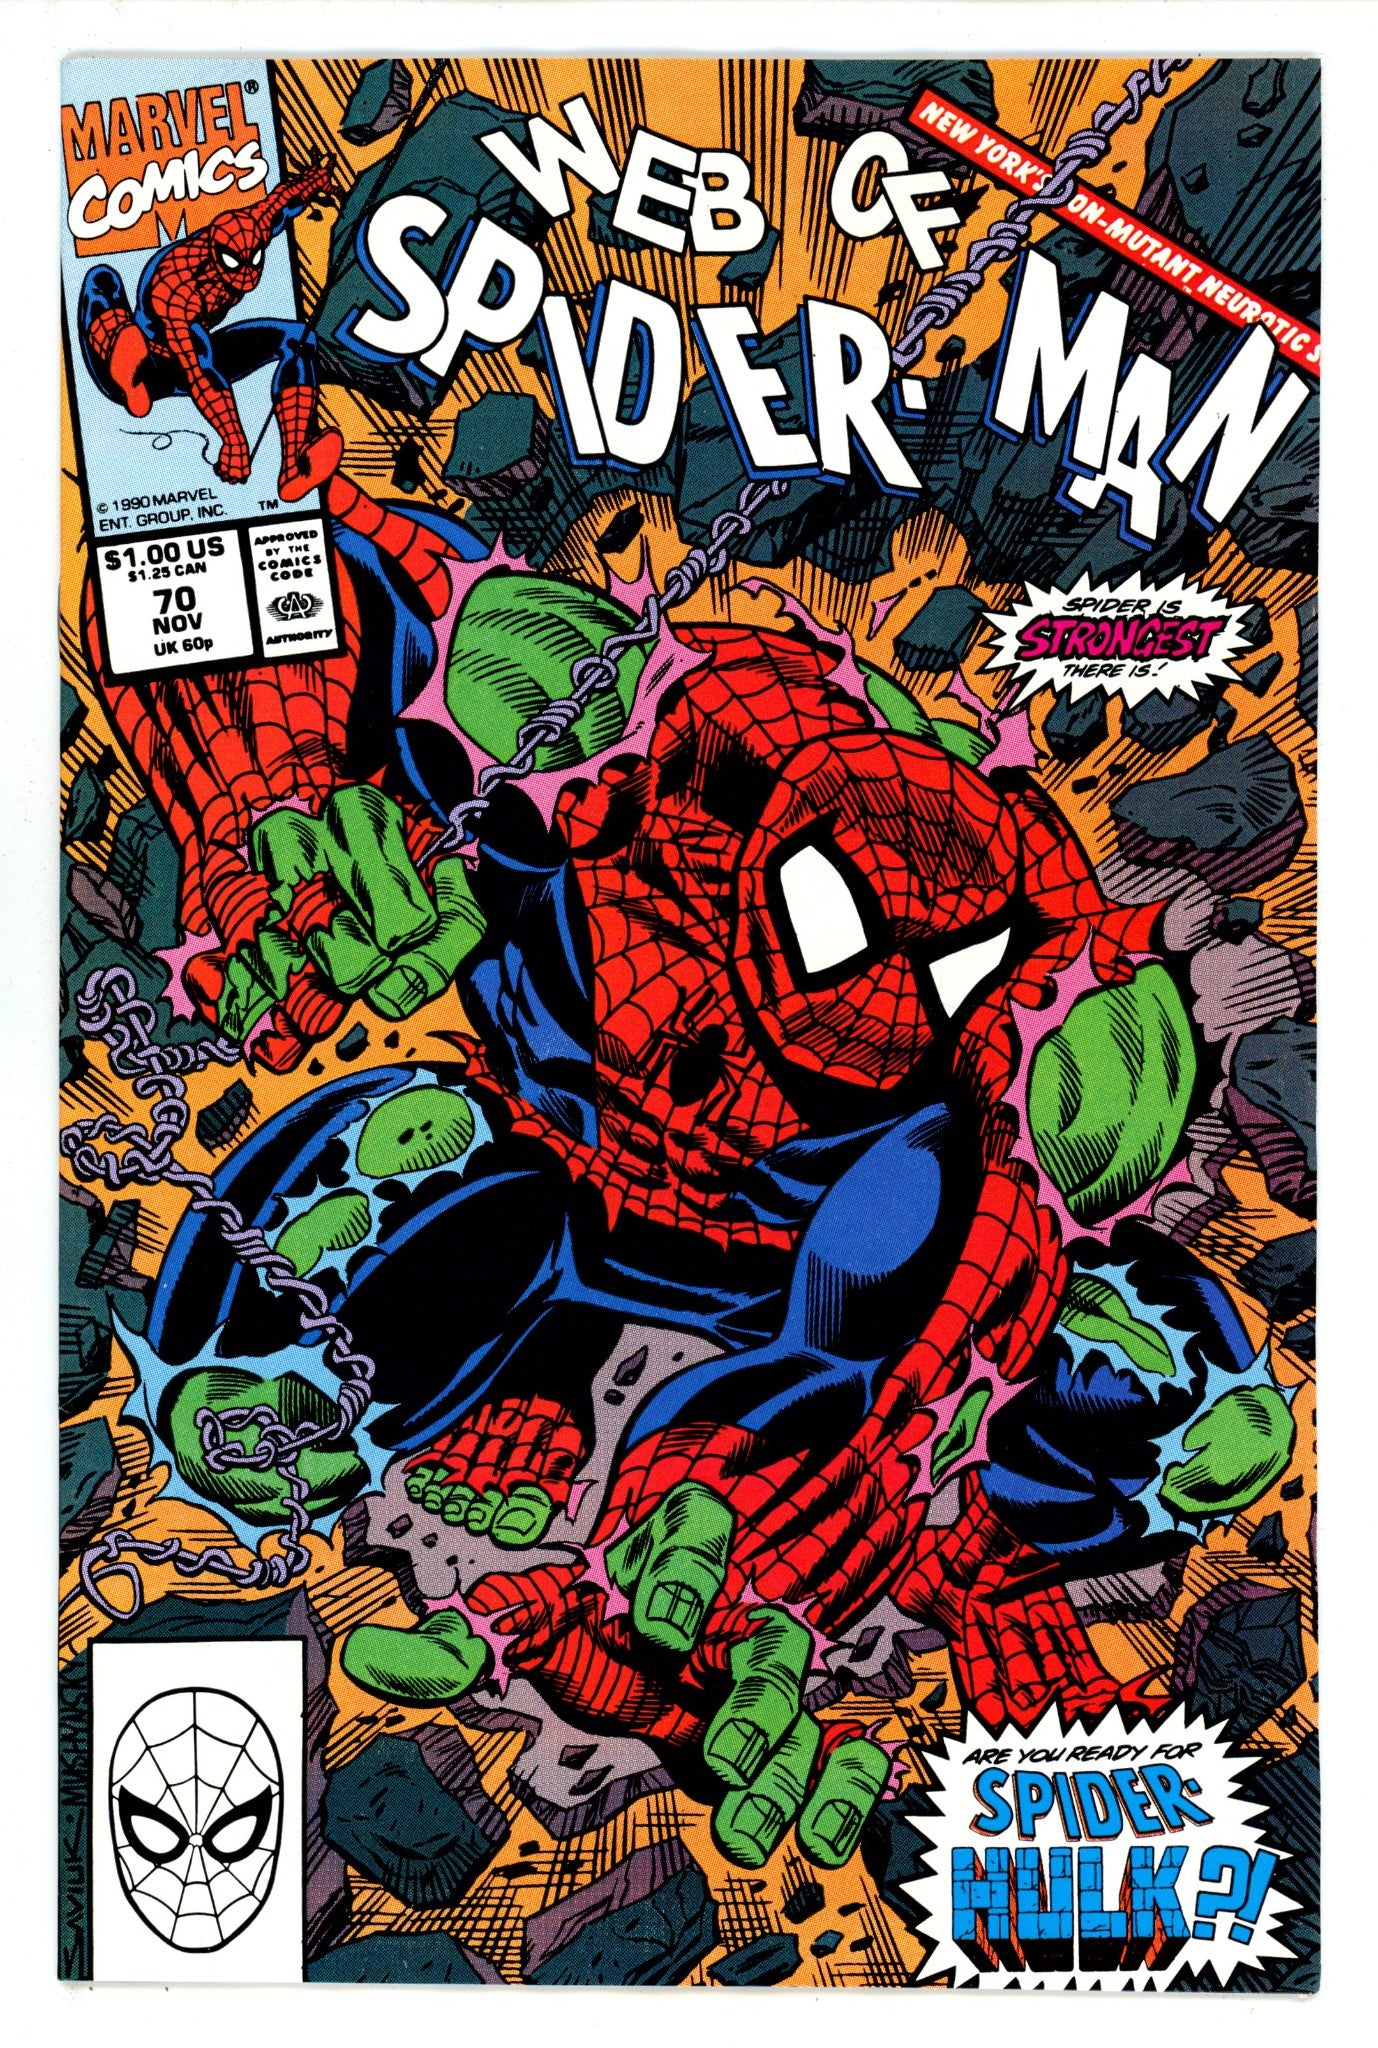 Web of Spider-Man Vol 1 70 VF (8.0) (1990) 